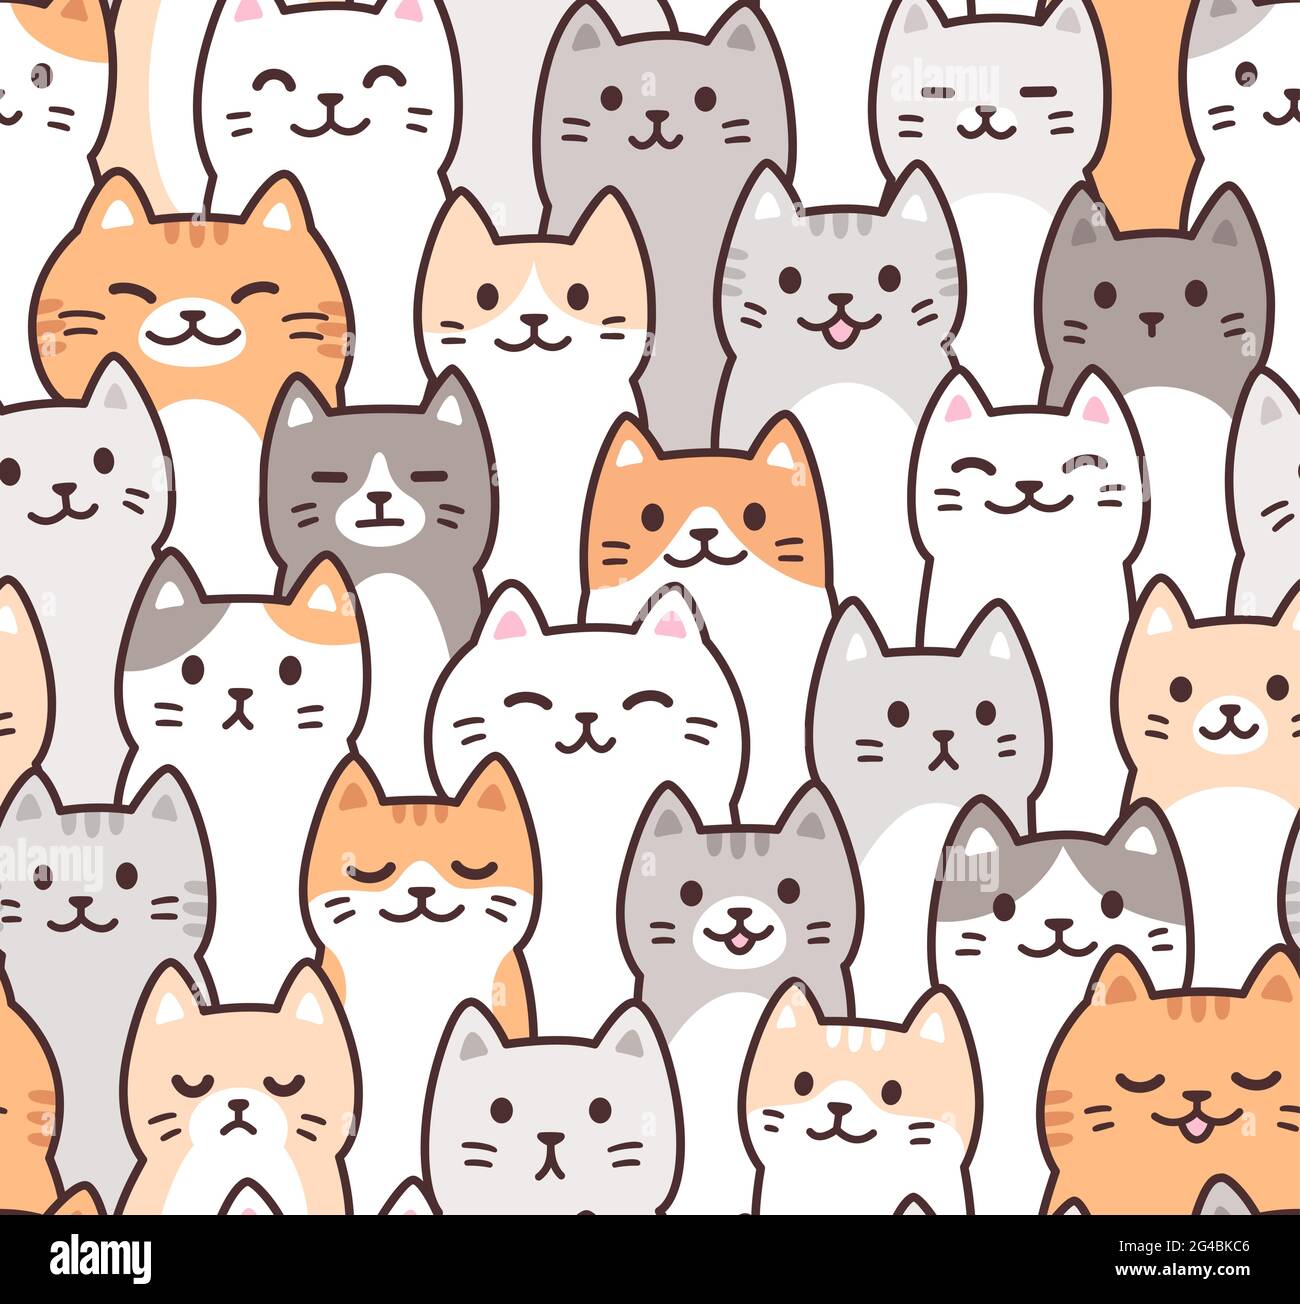 https://c8.alamy.com/comp/2G4BKC6/cute-cartoon-doodle-cats-pattern-kawaii-crowd-of-cat-faces-seamless-background-vector-illustration-2G4BKC6.jpg